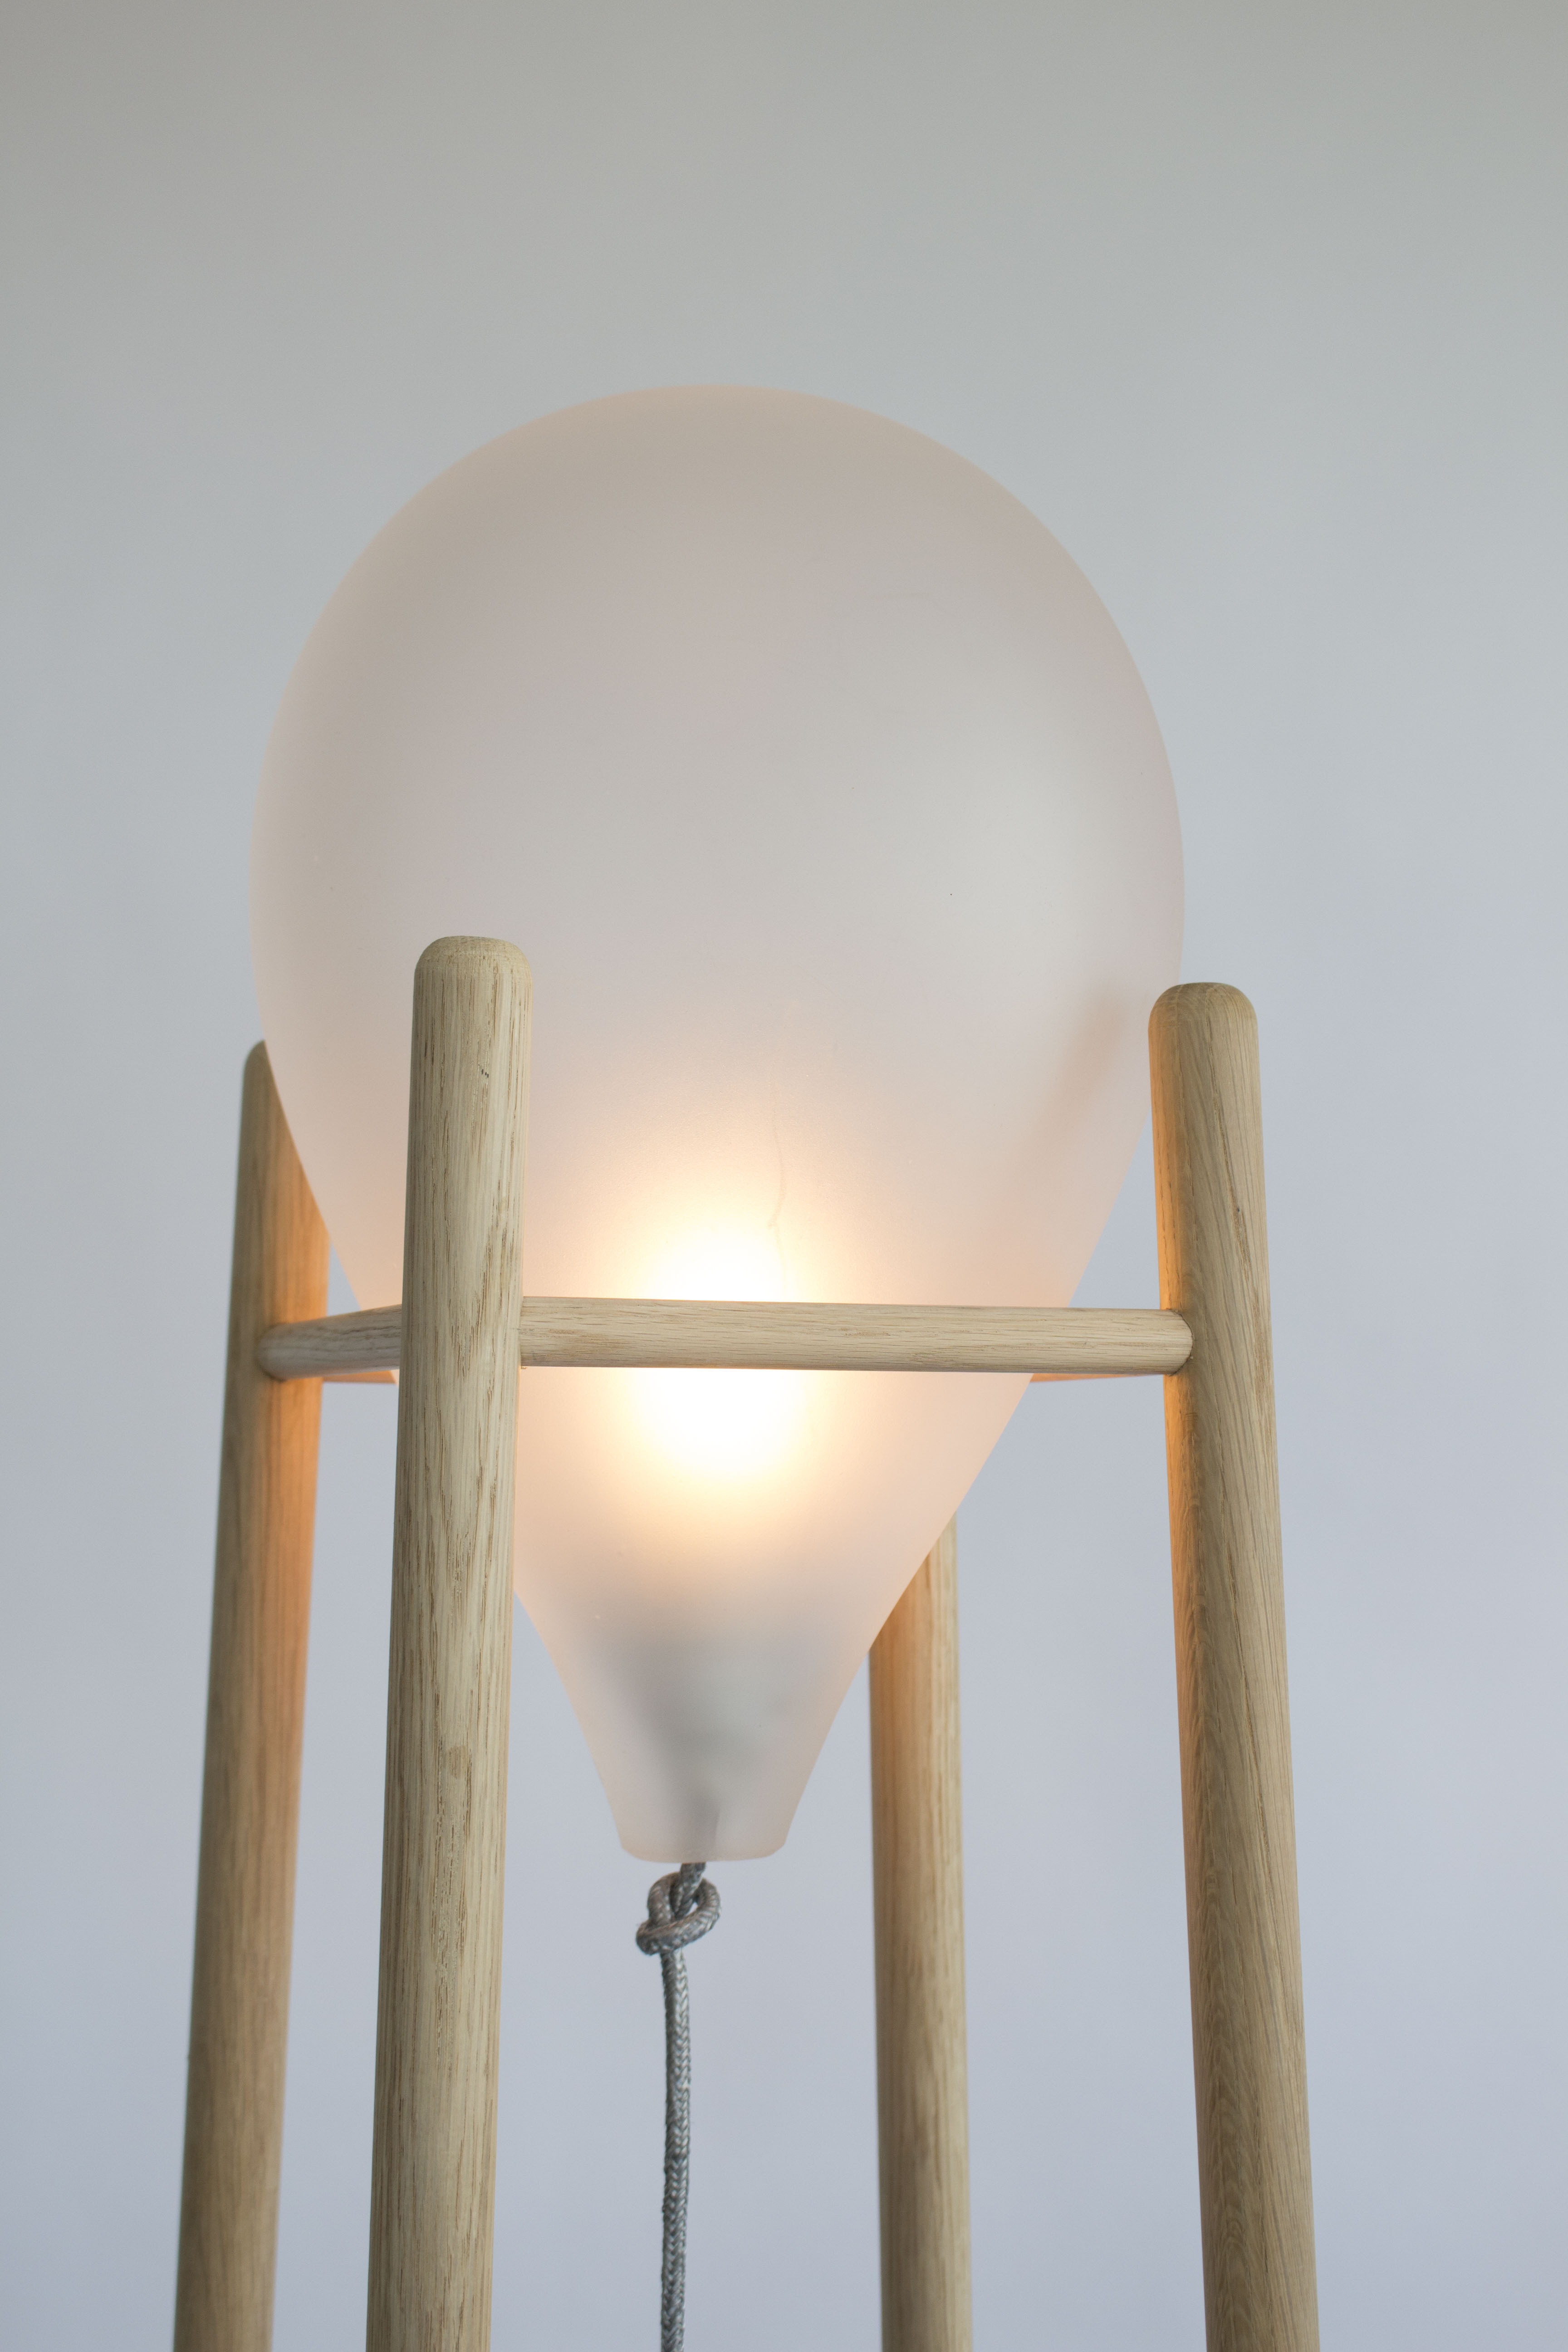 balloons doegg guðmundsdóttir lampen design inneneinrichtung einrichtungsidee